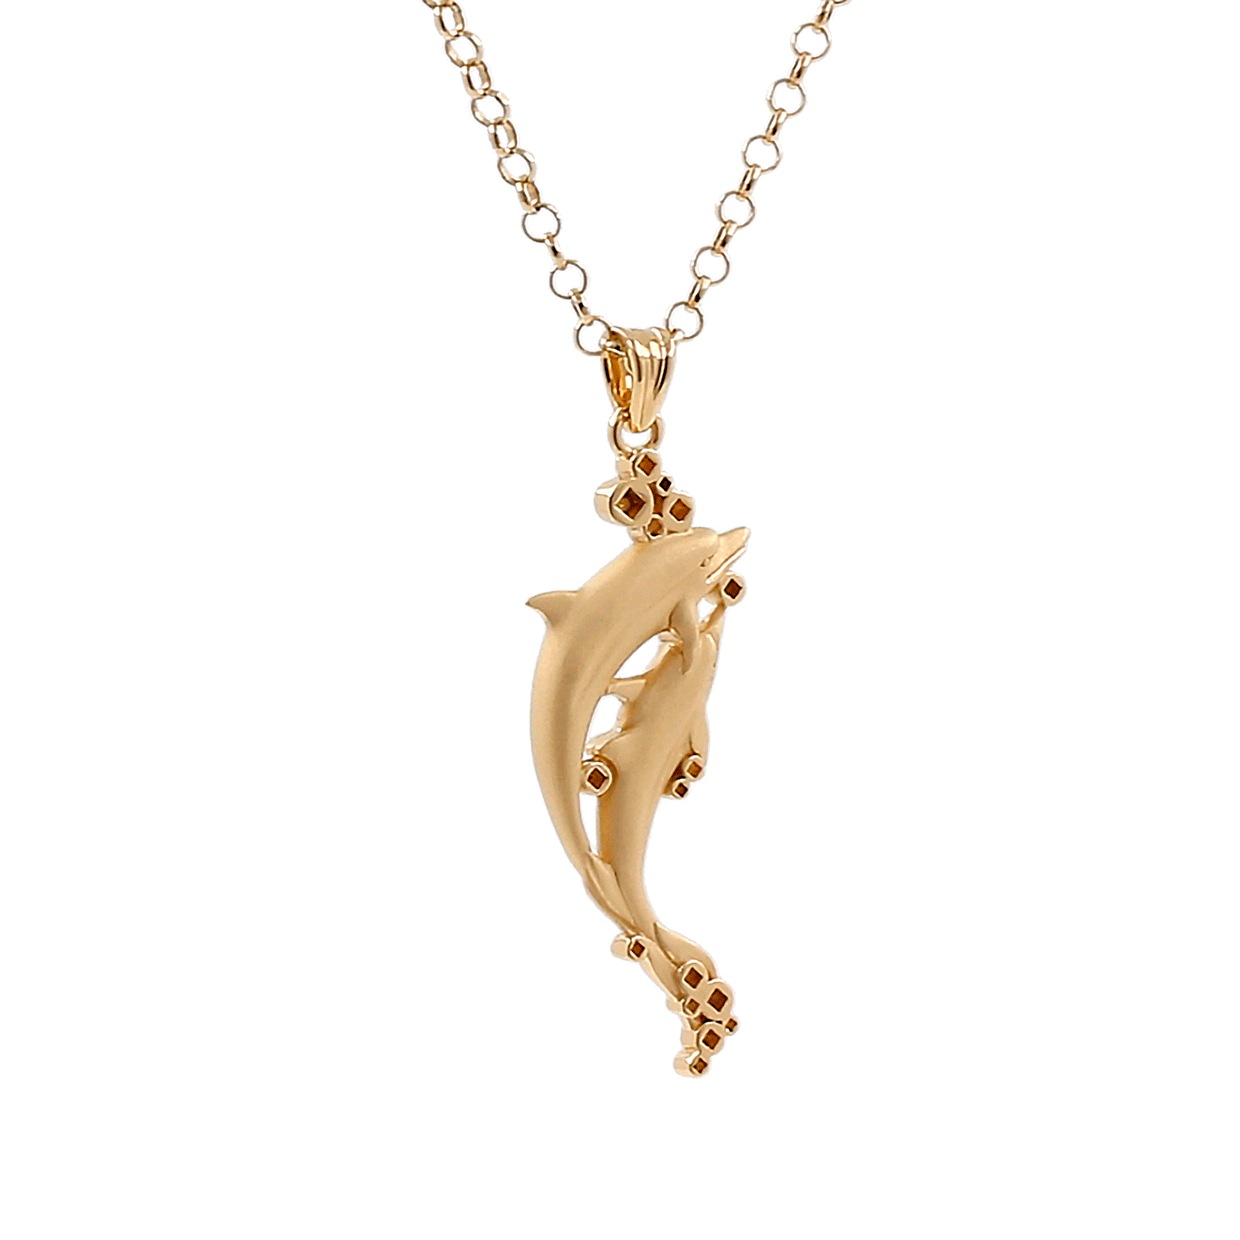 Gold Necklace “DOLPHIN” - Manuel Carrera Cordon